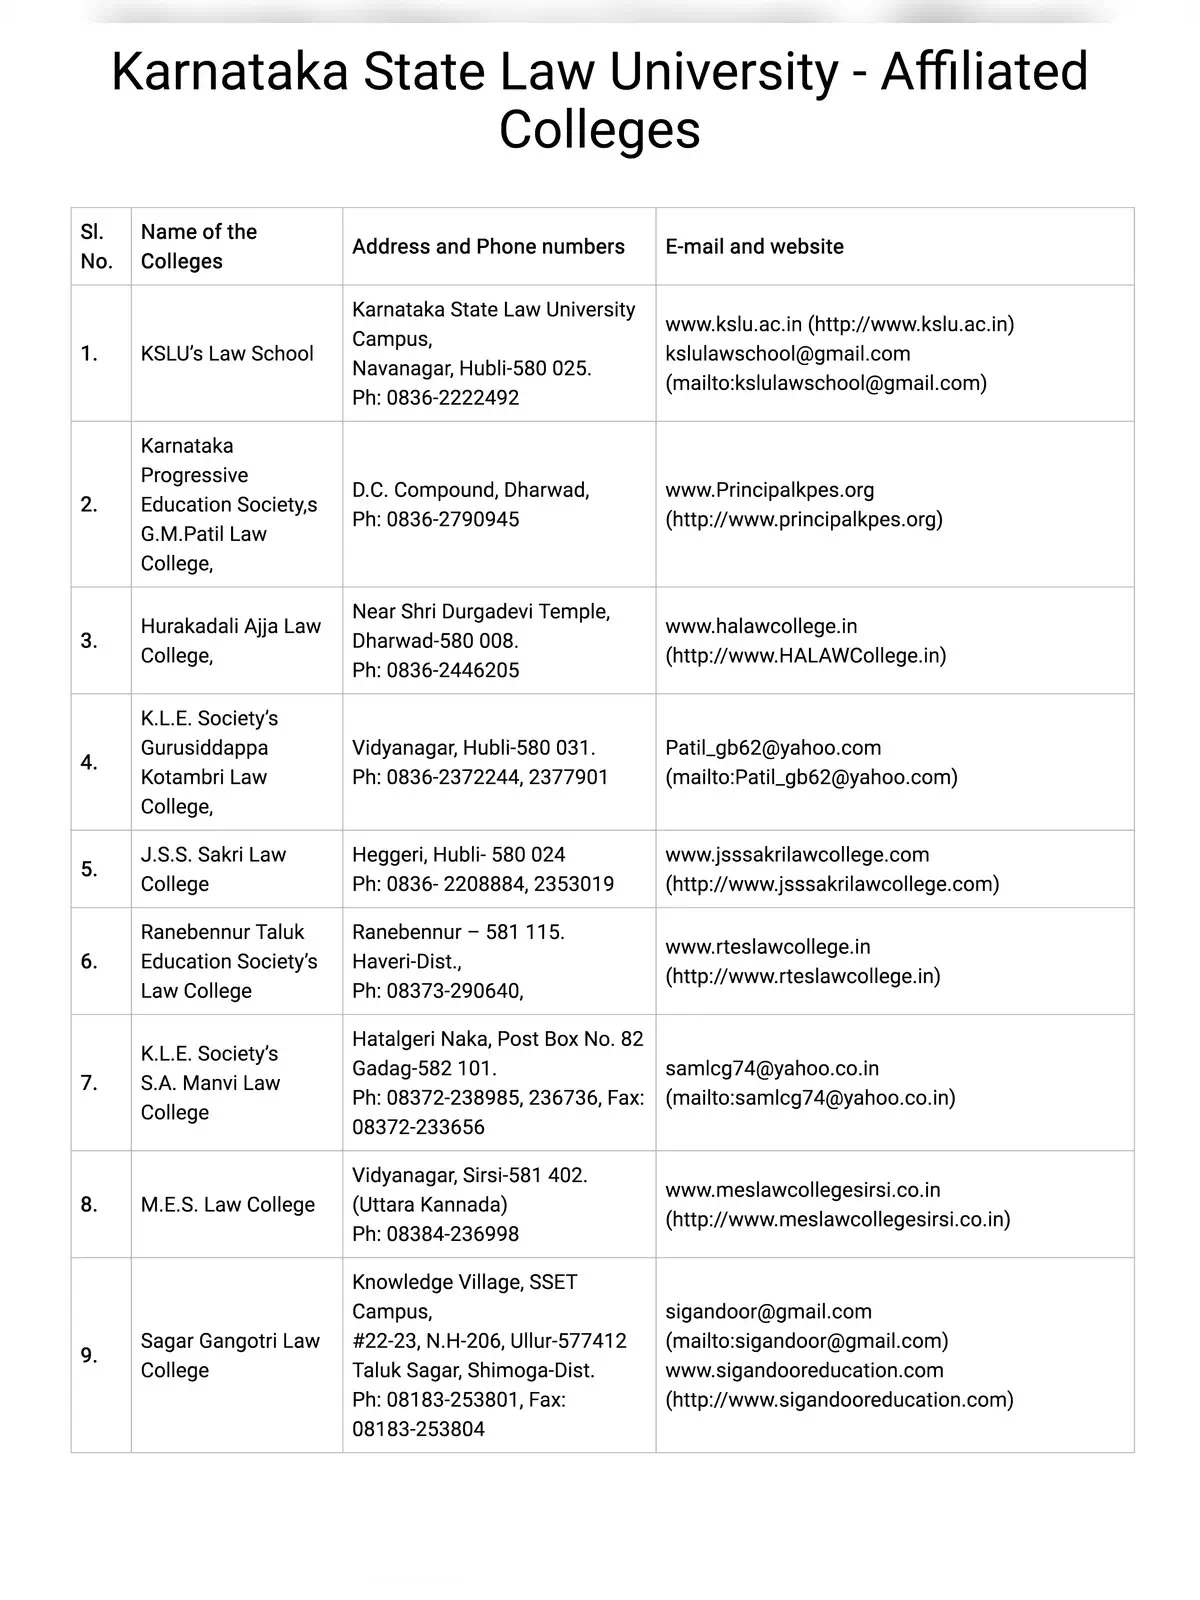 Karnataka State Law University Colleges List